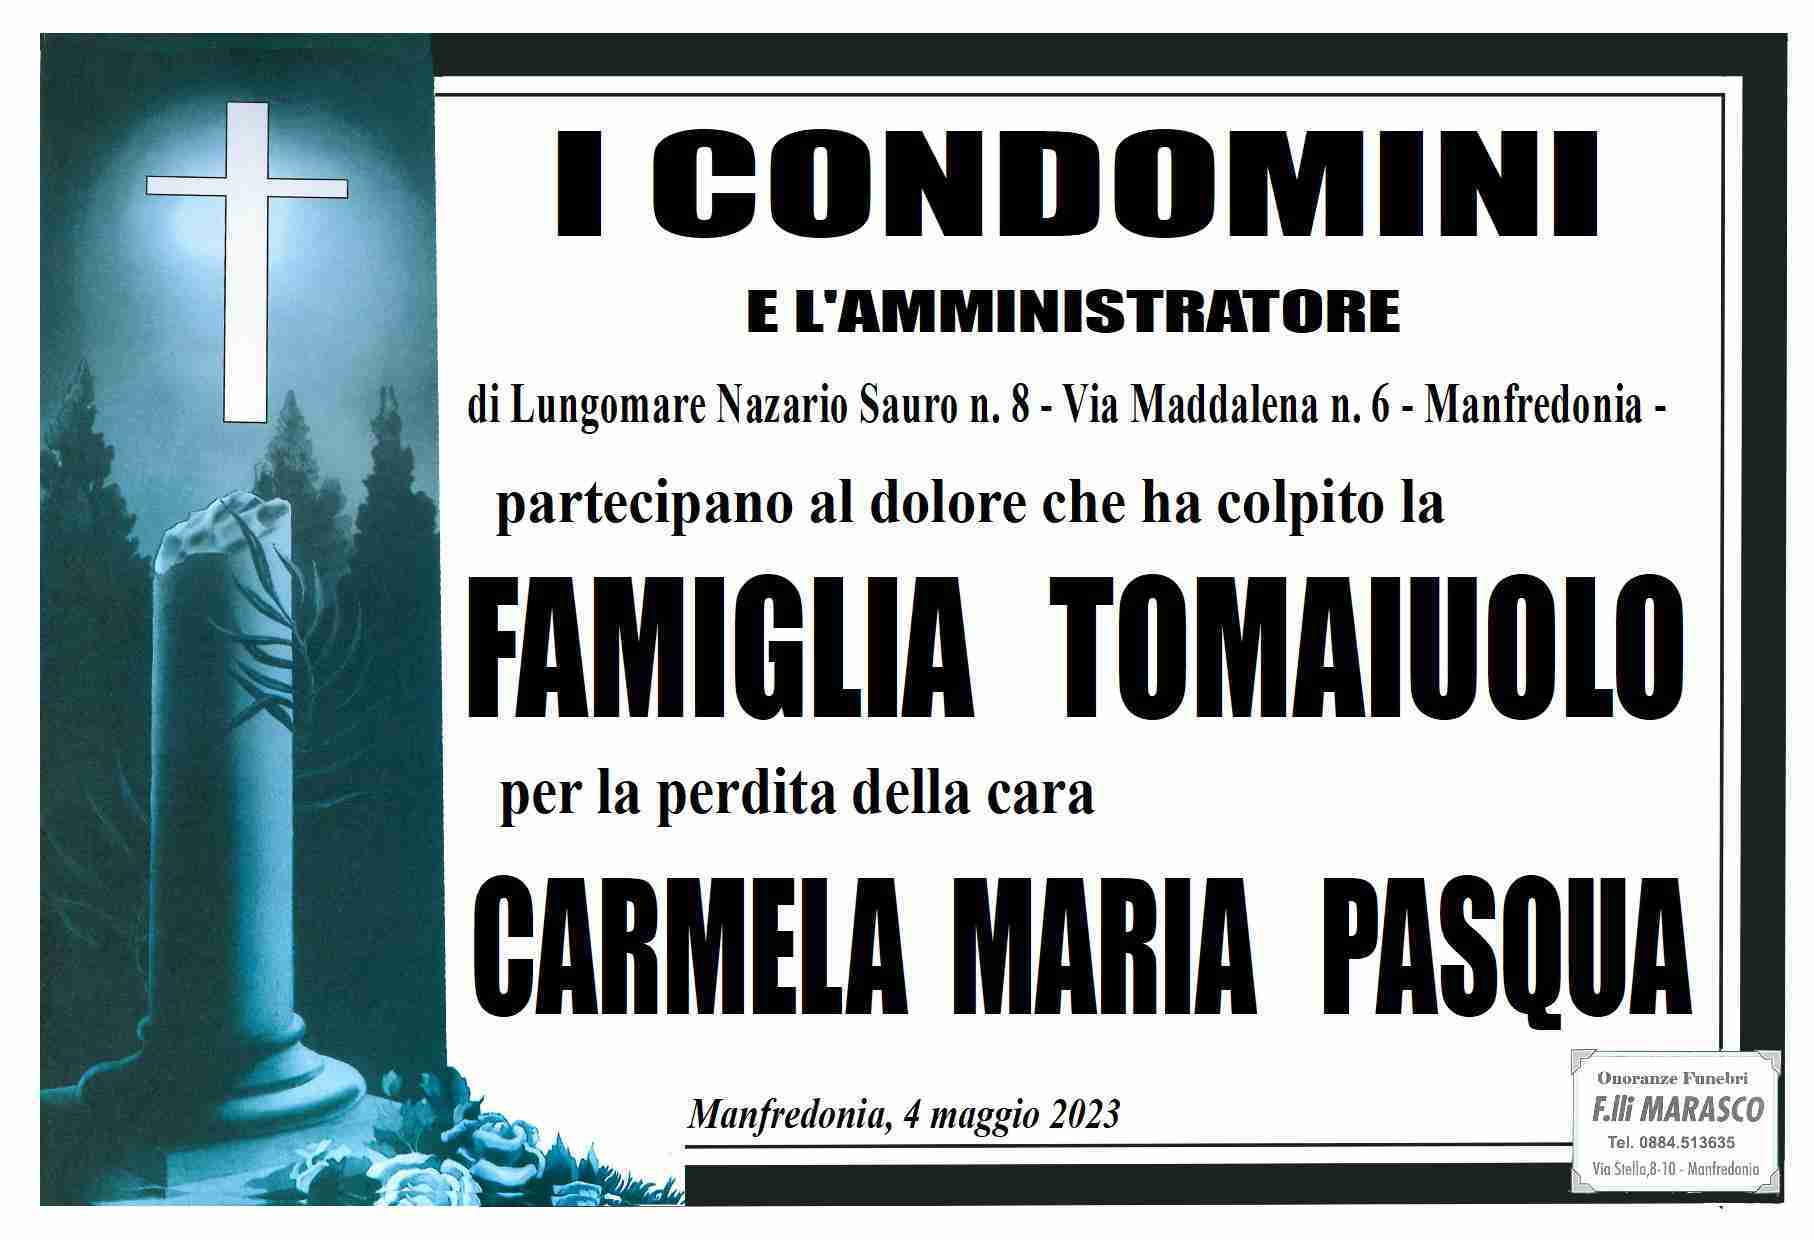 Carmela Maria Pasqua